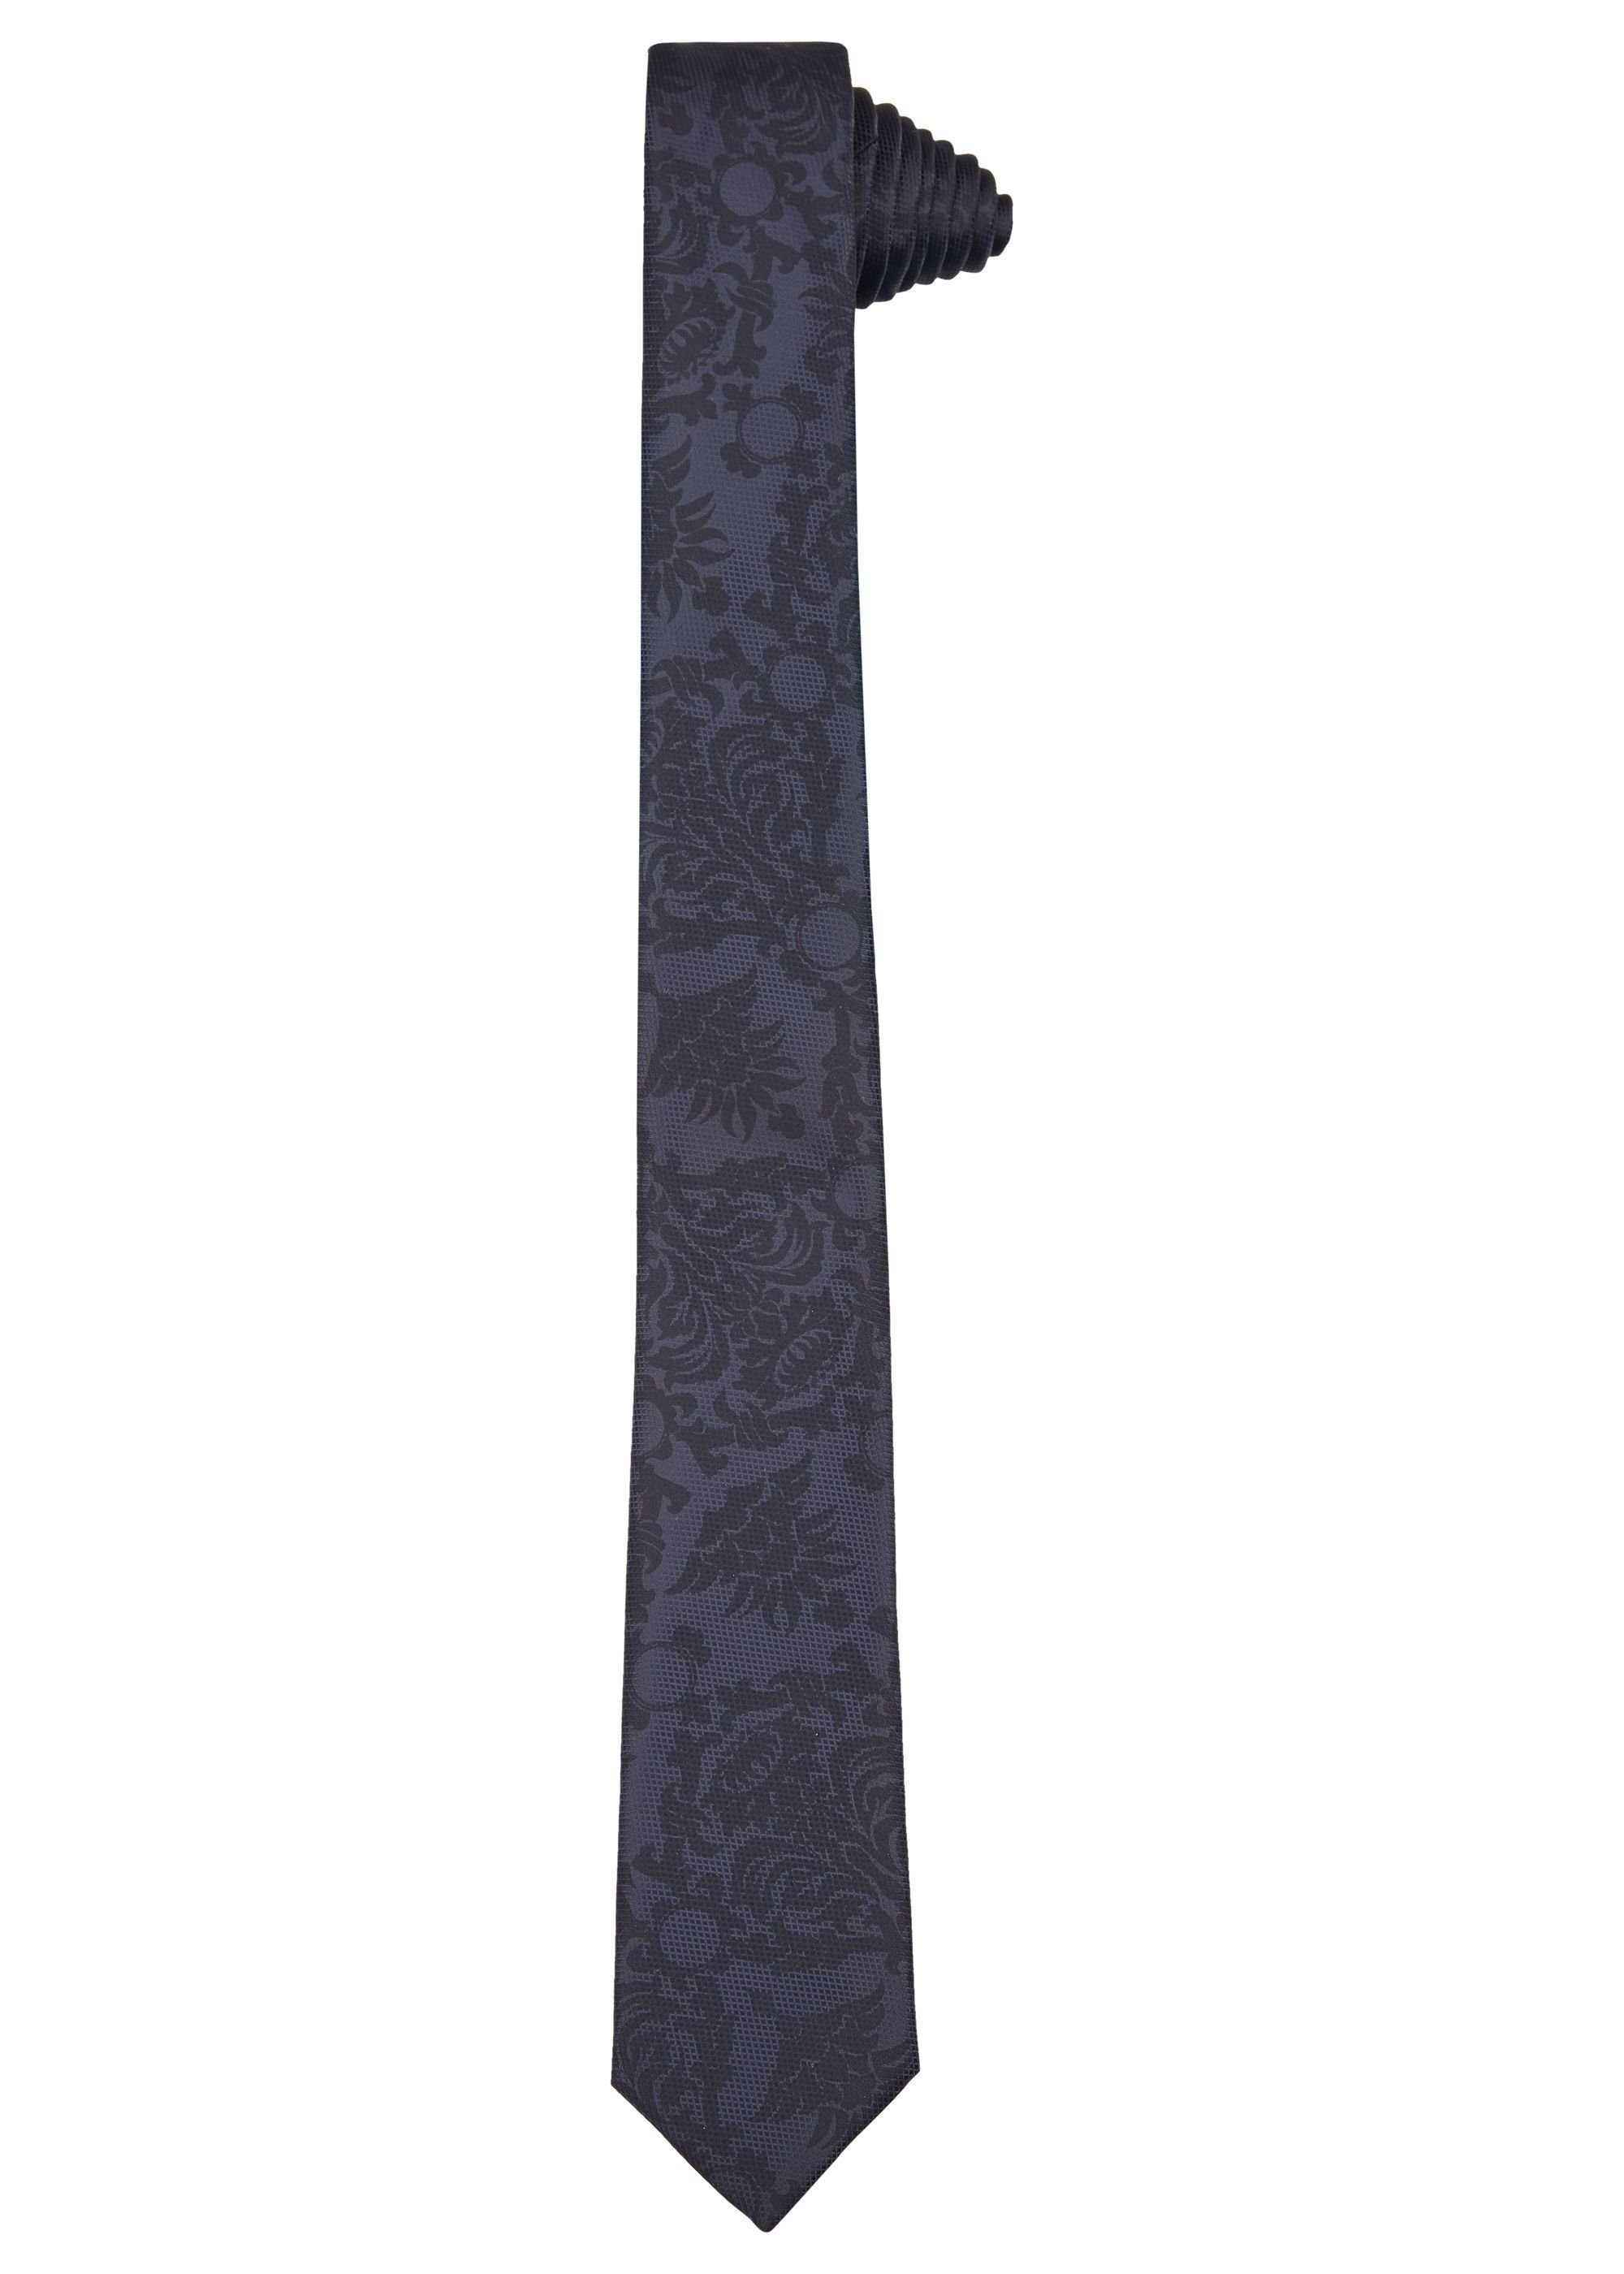 HECHTER PARIS Krawatte aus hochwertiger Kunstfaser